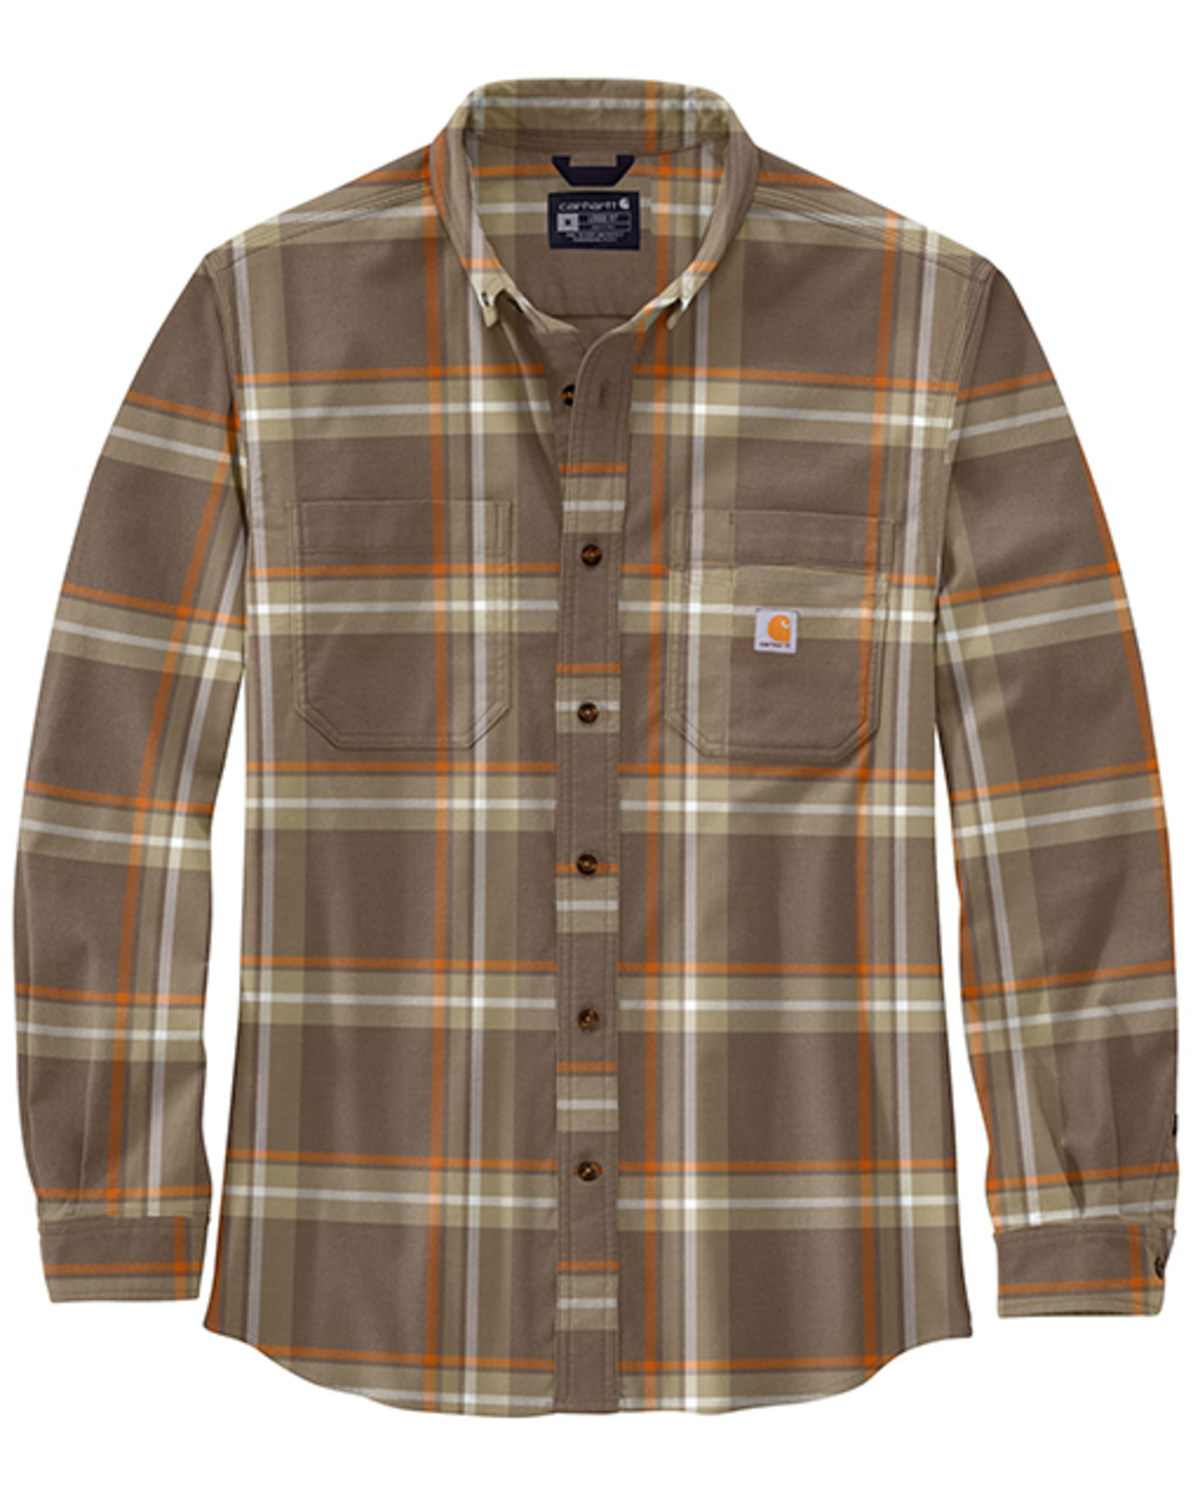 Carhartt Men's Relaxed Fit Midweight Plaid Print Long Sleeve Button-Down Flannel Work Shirt